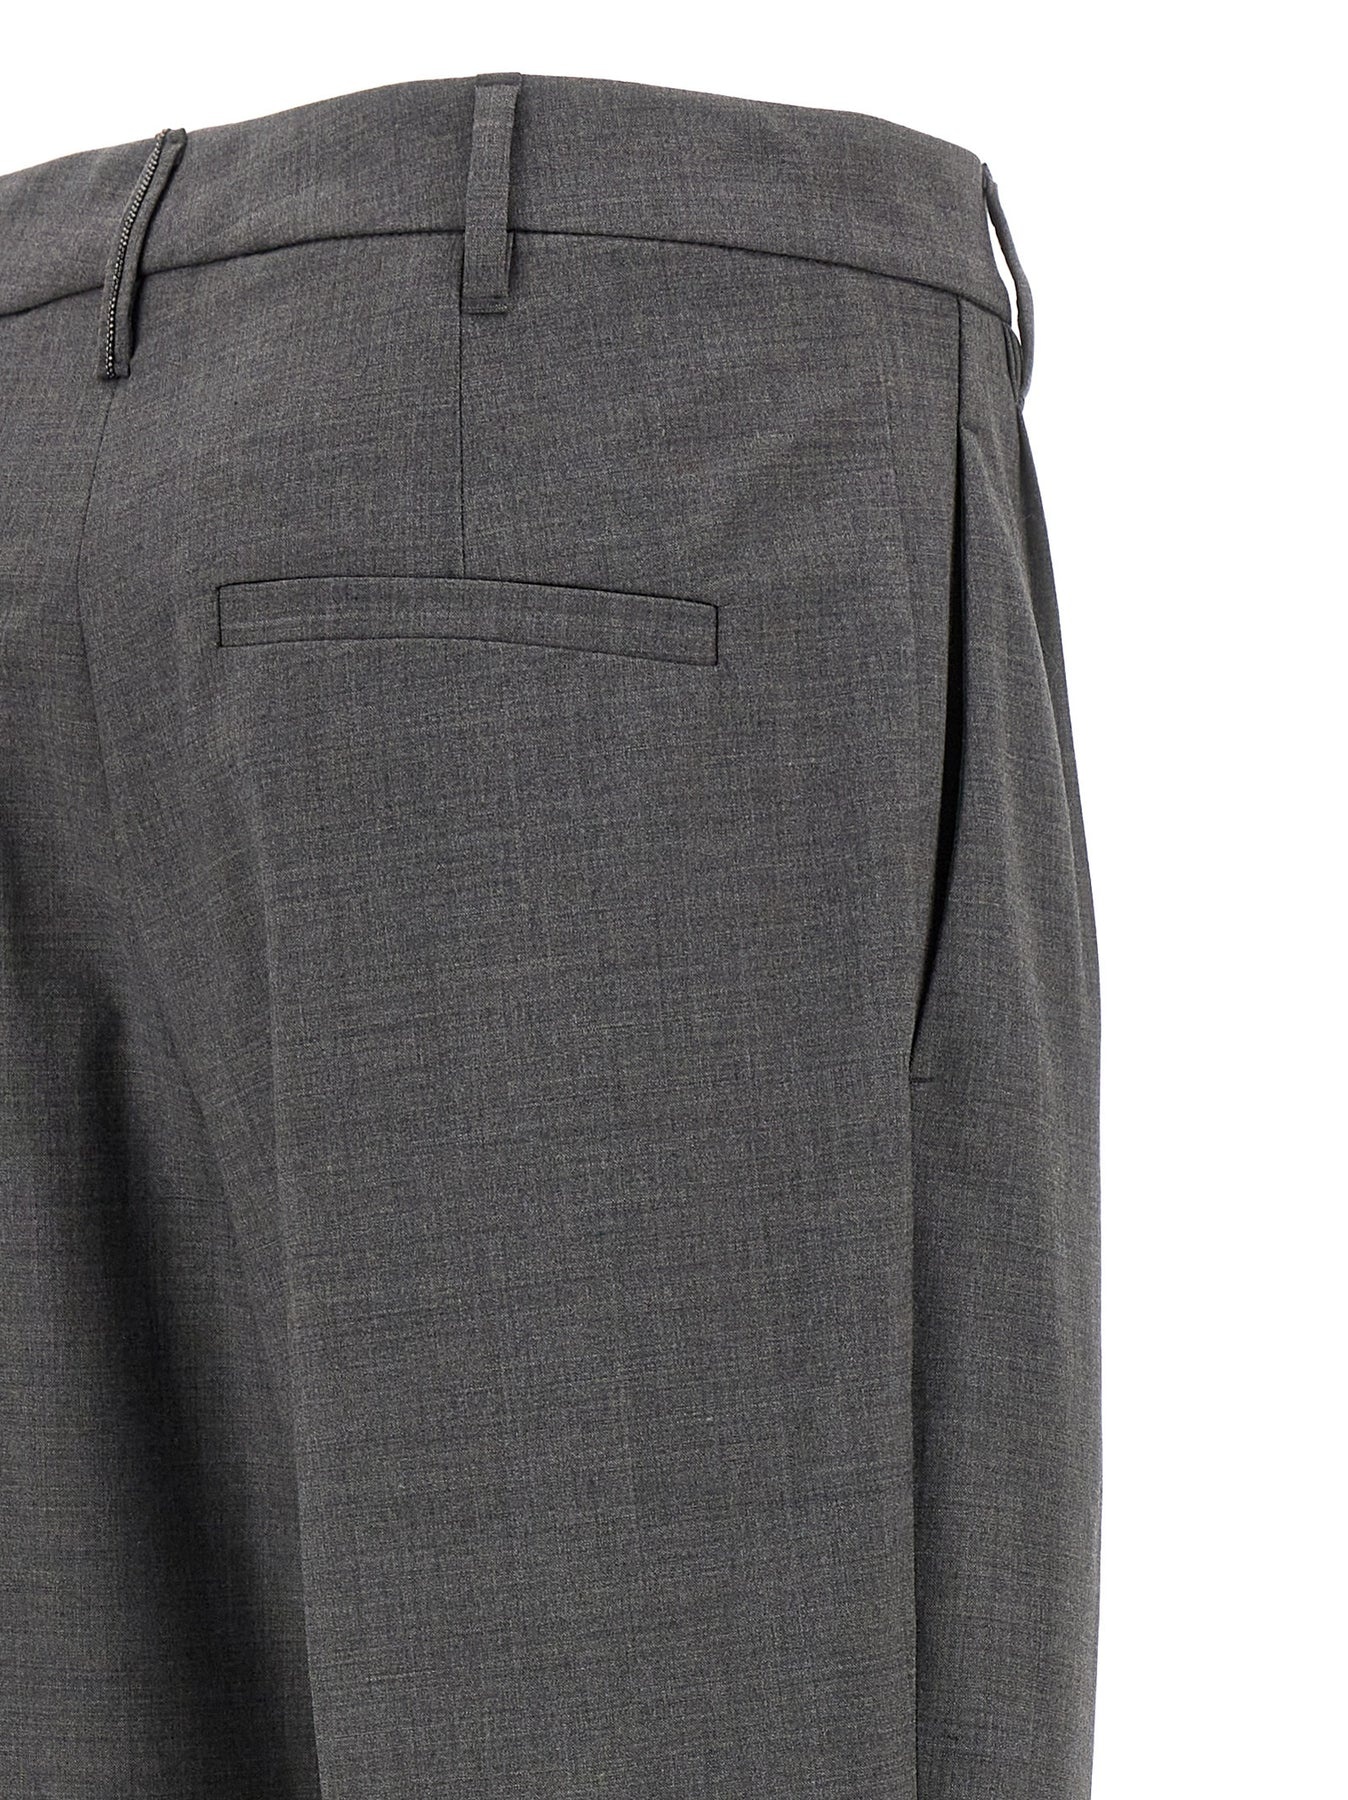 Pin Tuck Trousers Pants Gray - 4